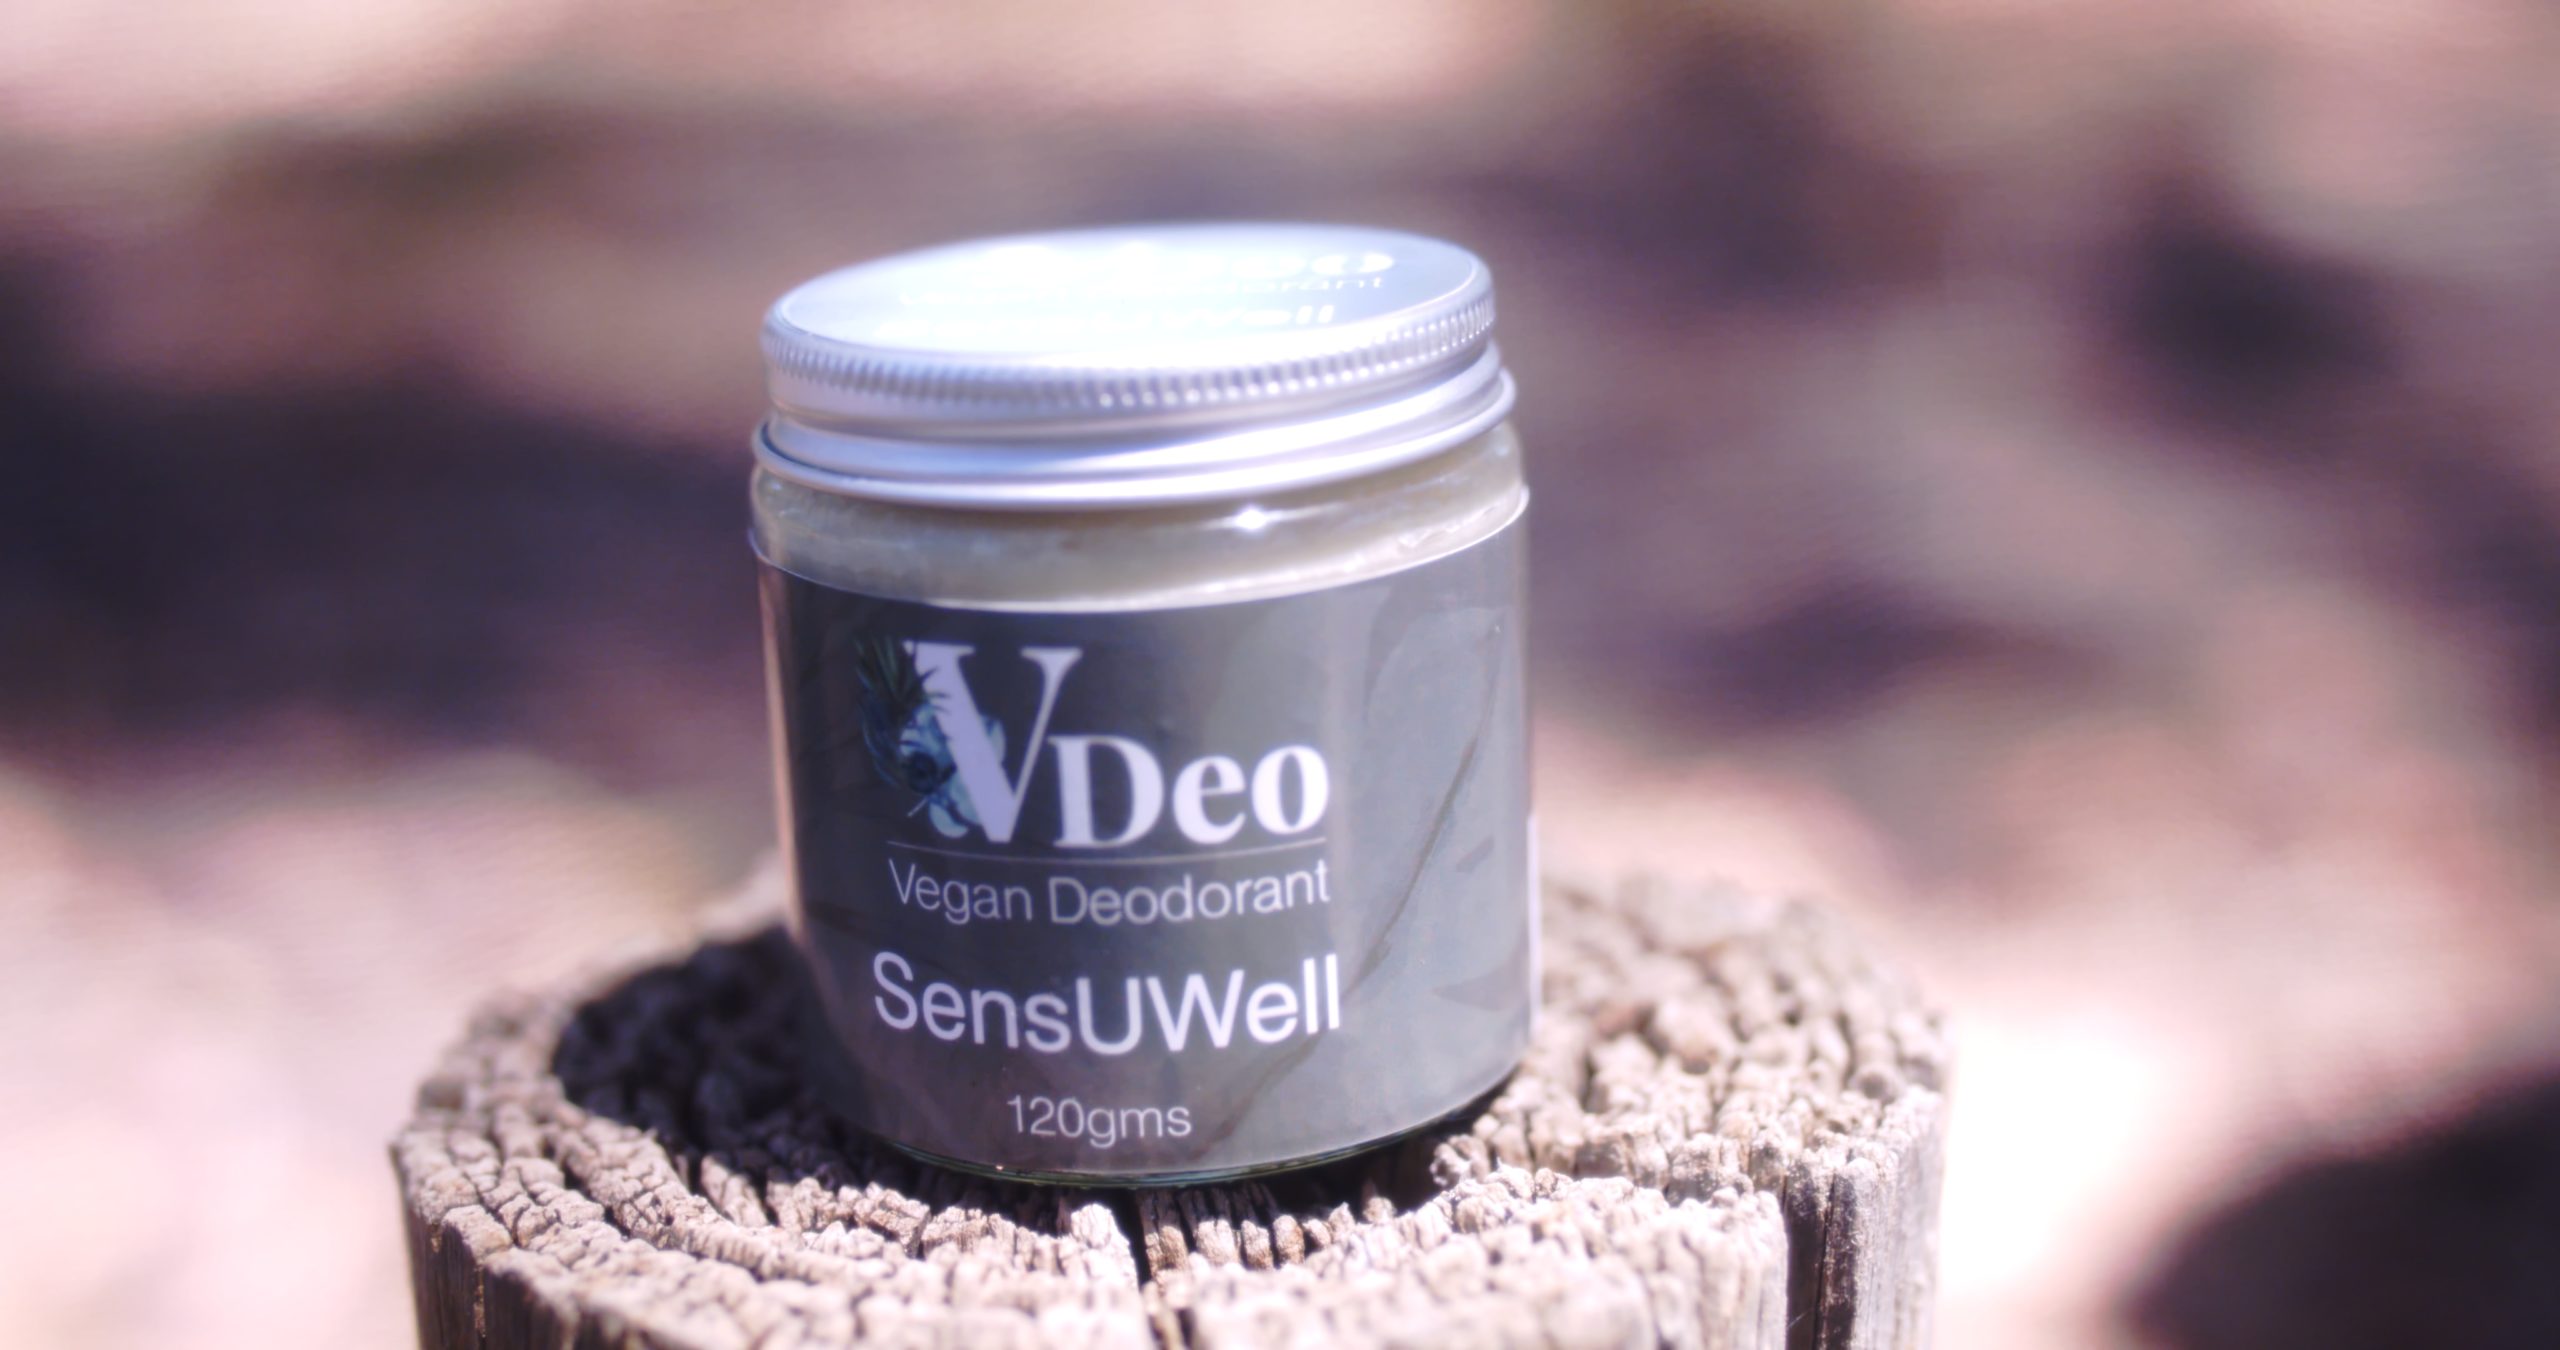 VDeo Vegan Deodorant SensUWell 120g